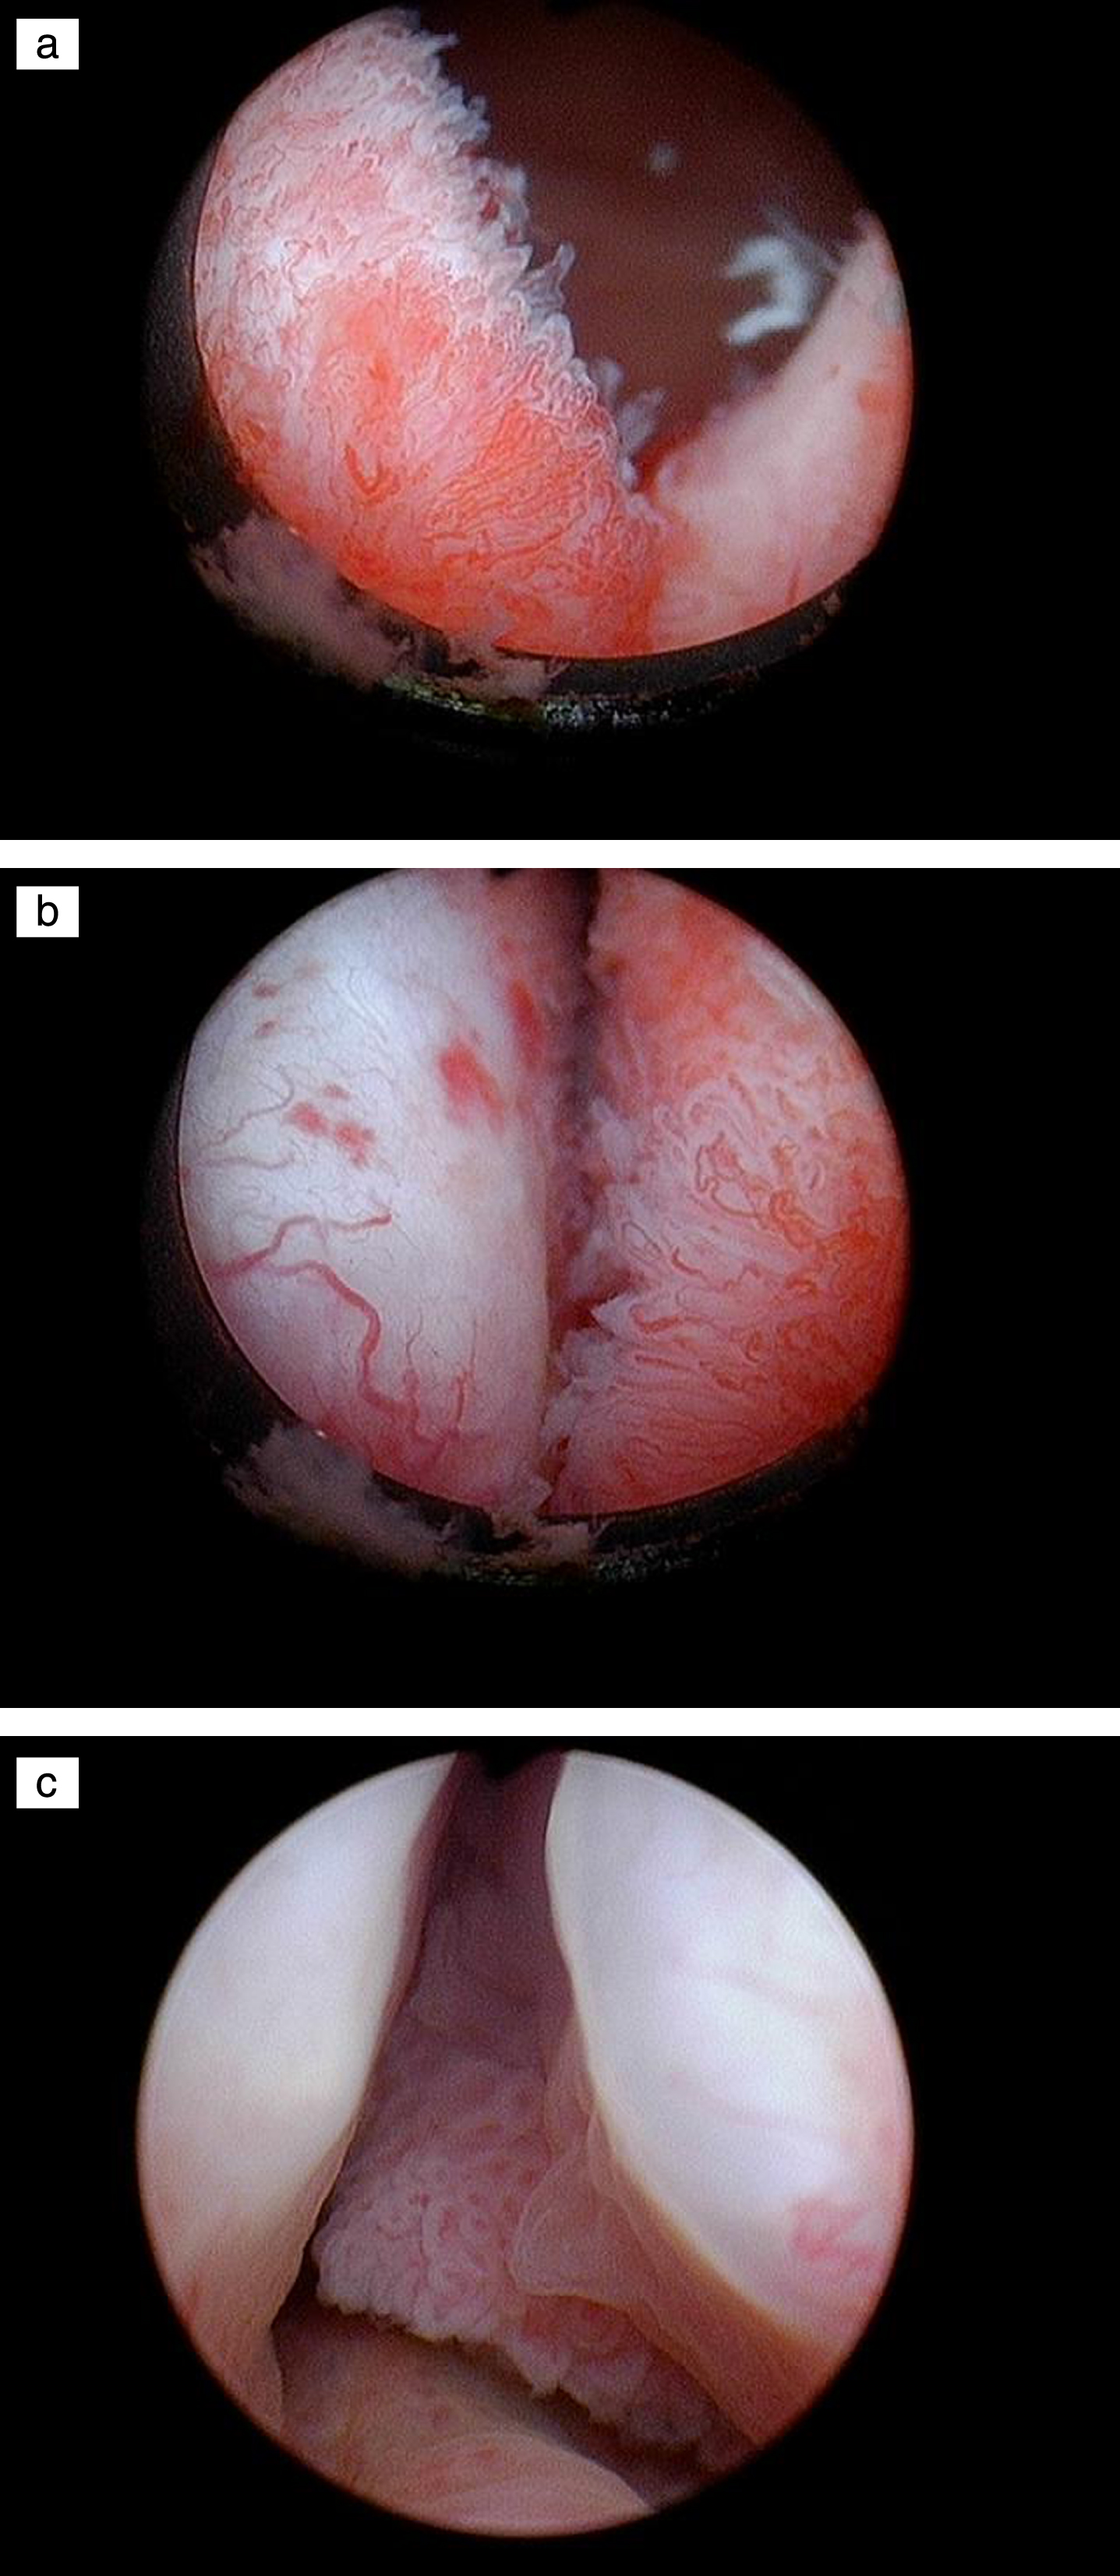 Papillary tumor in the prostatic urethra.